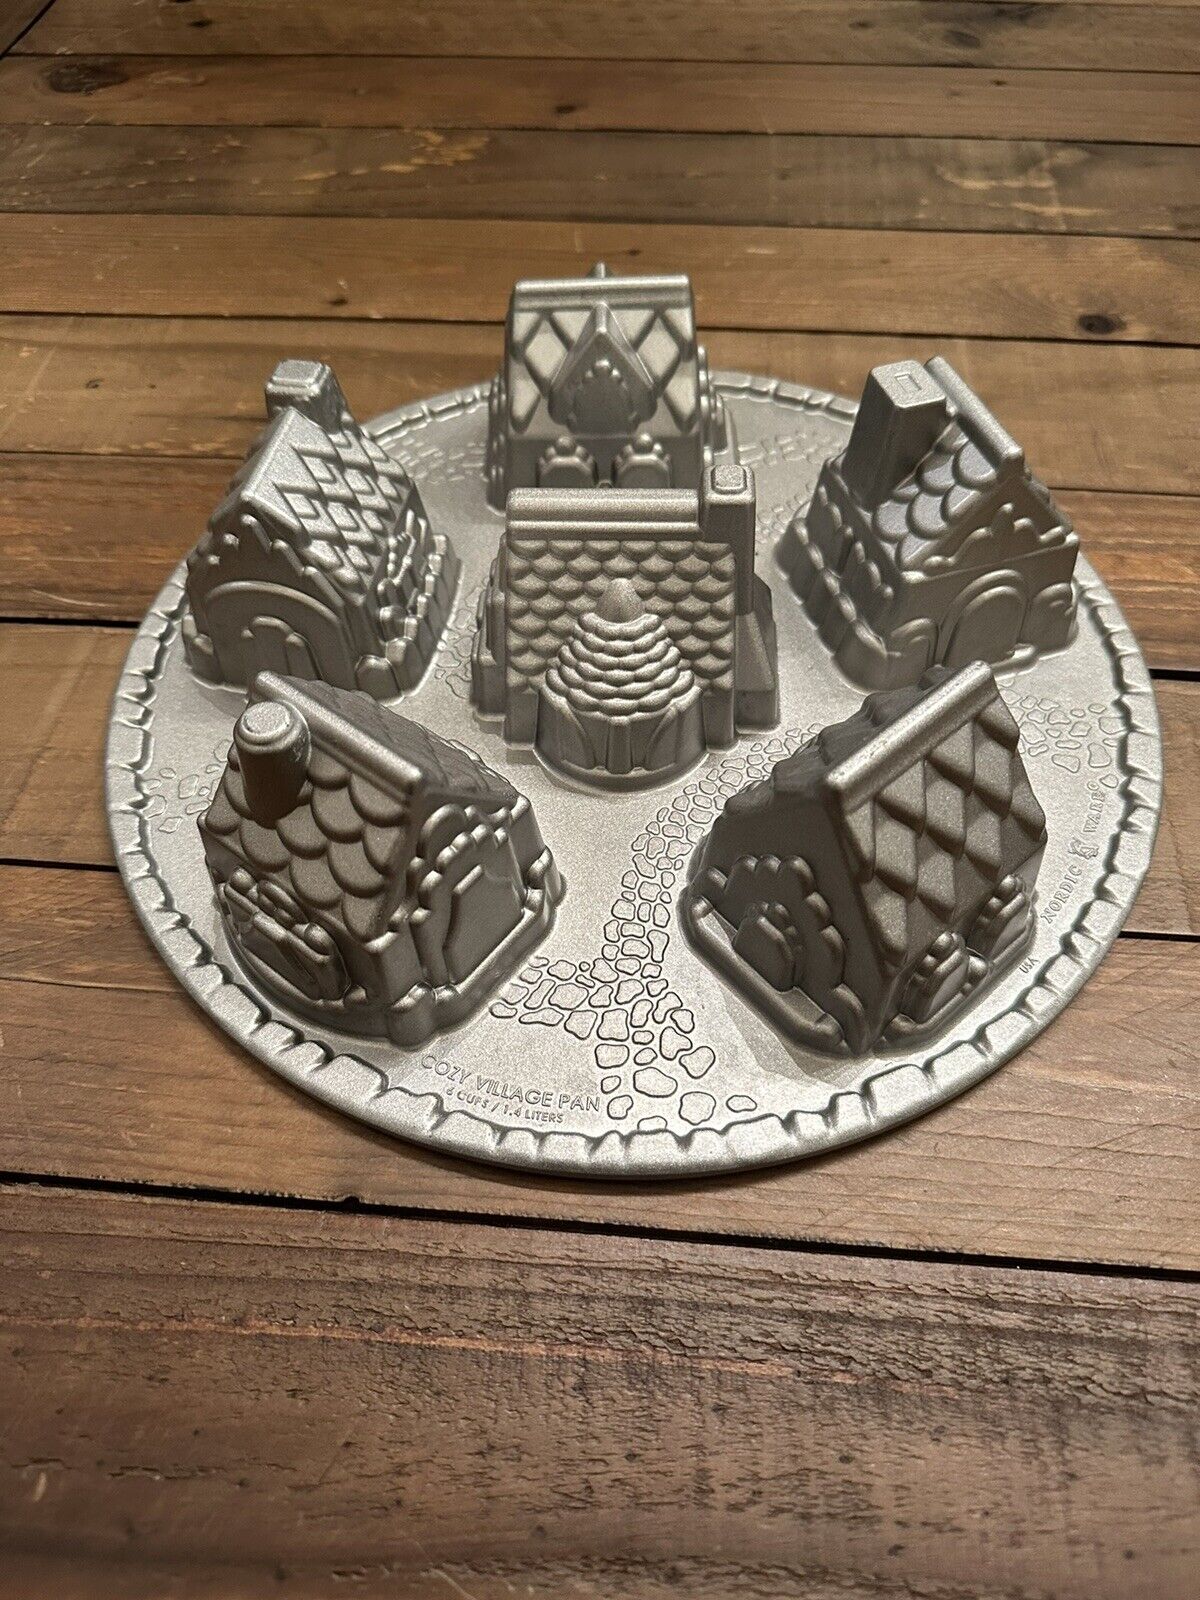 Cozy Village Individual Cottage House Shaped Cake Pan Nordic Ware Cast Aluminum